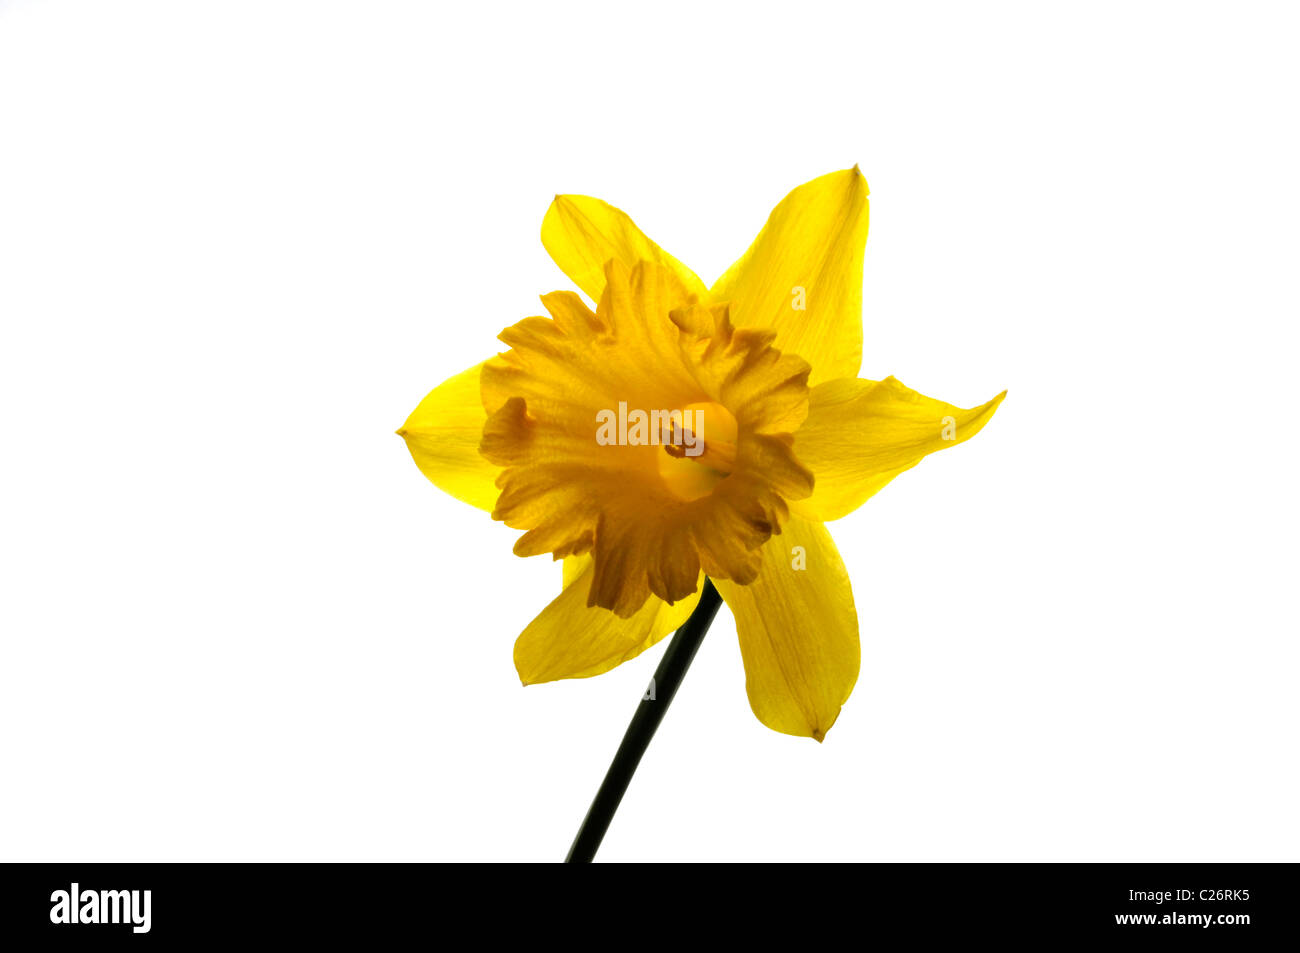 yellow daffodil close up Stock Photo